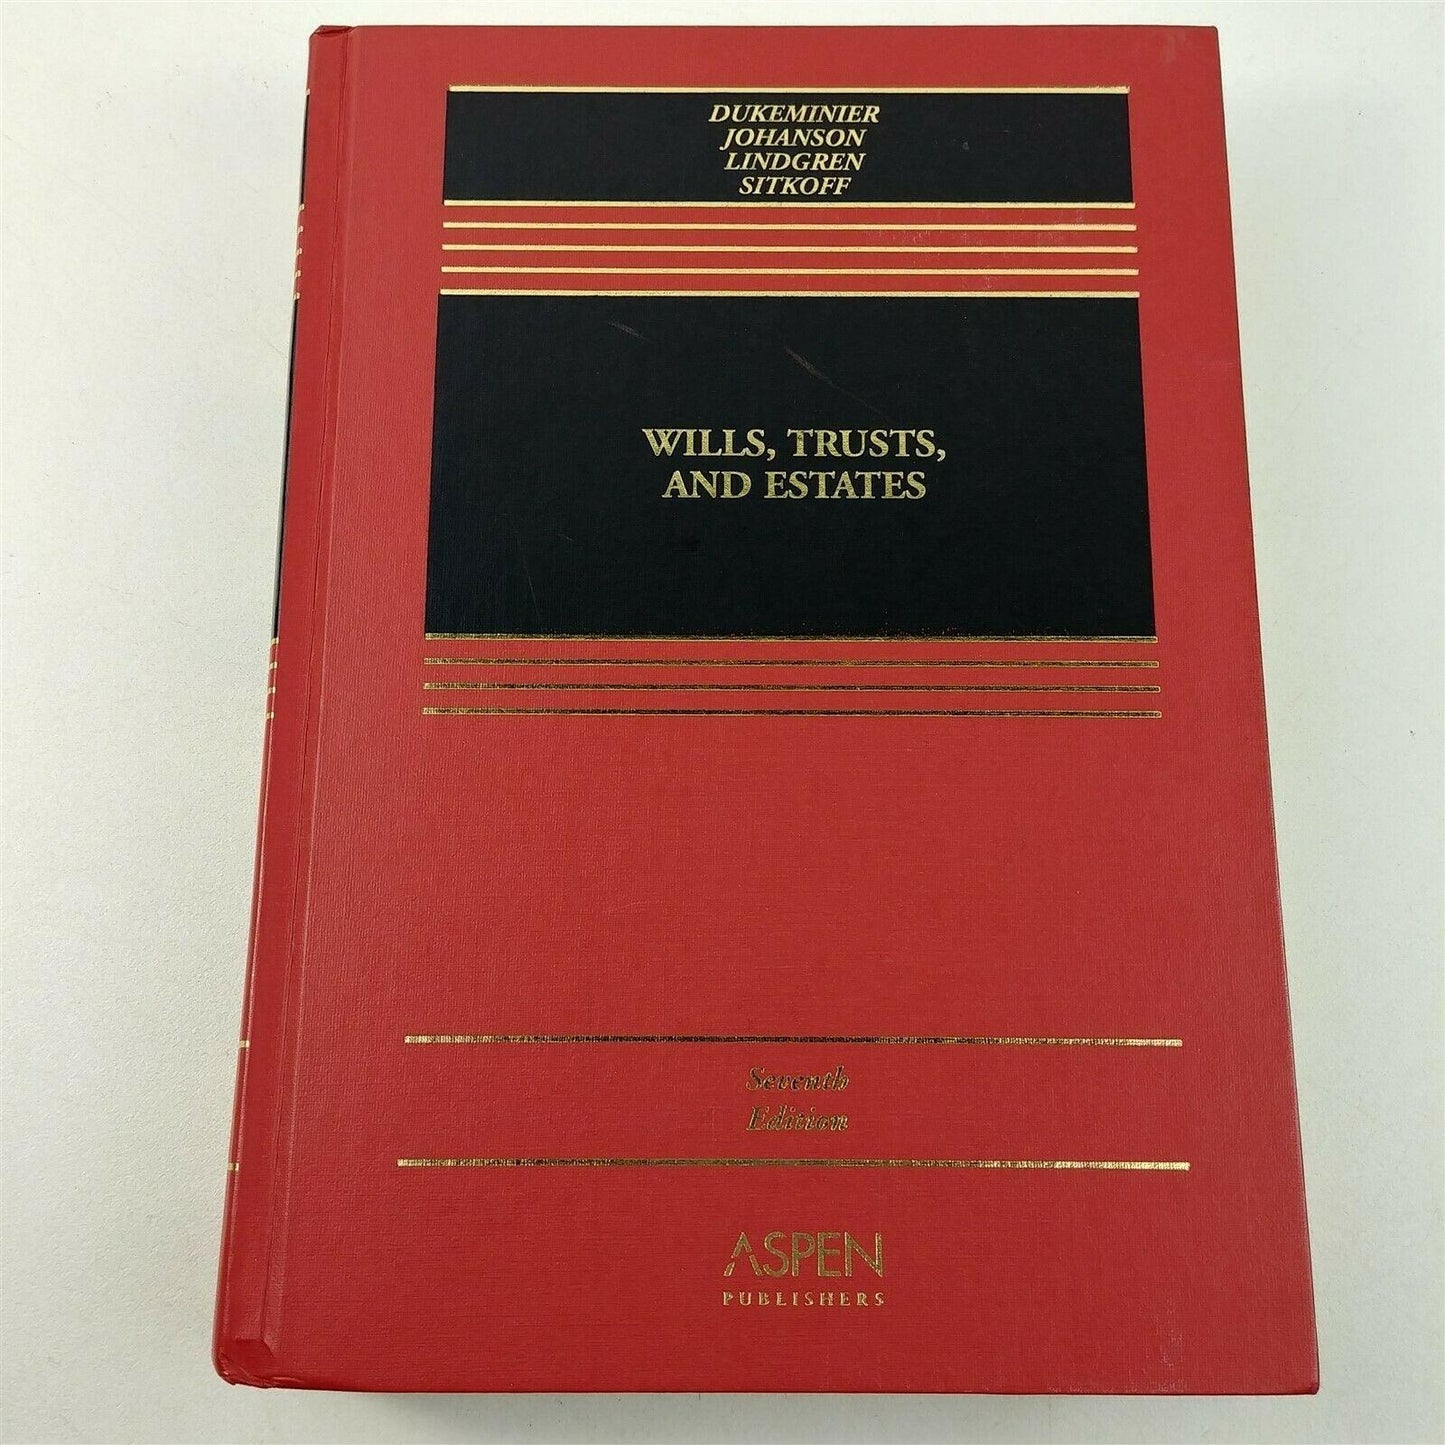 Wills Trusts and Estates 7th Edition by Dukeminier, Johanson, Lindgren & Sitkoff